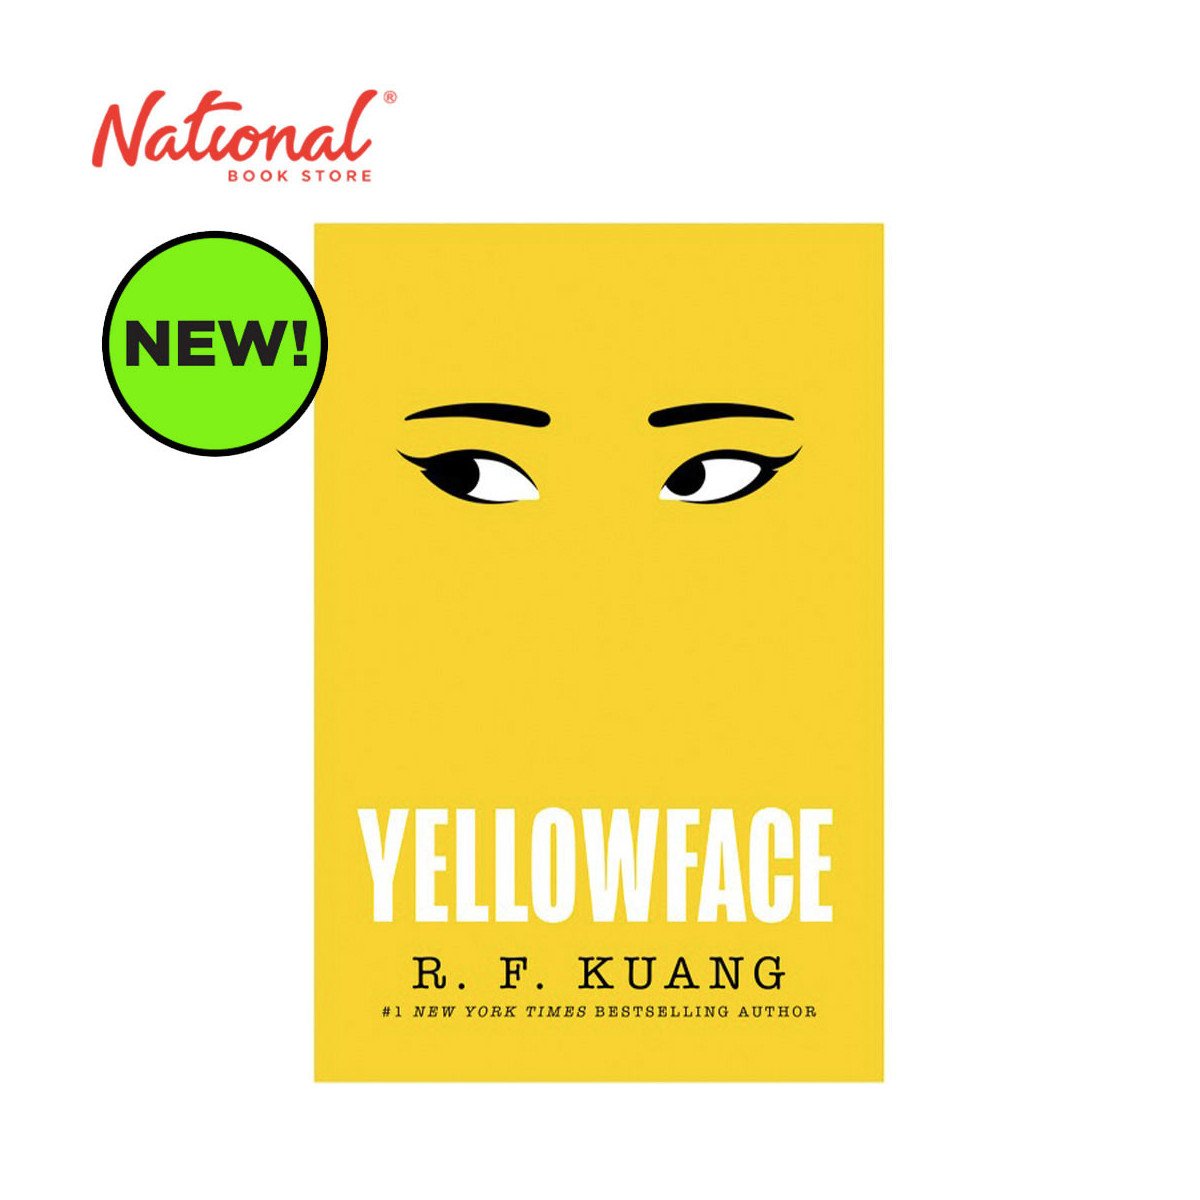 Yellowface by R. F. Kuang - Trade Paperback - Sci-Fi, Fantasy & Horror